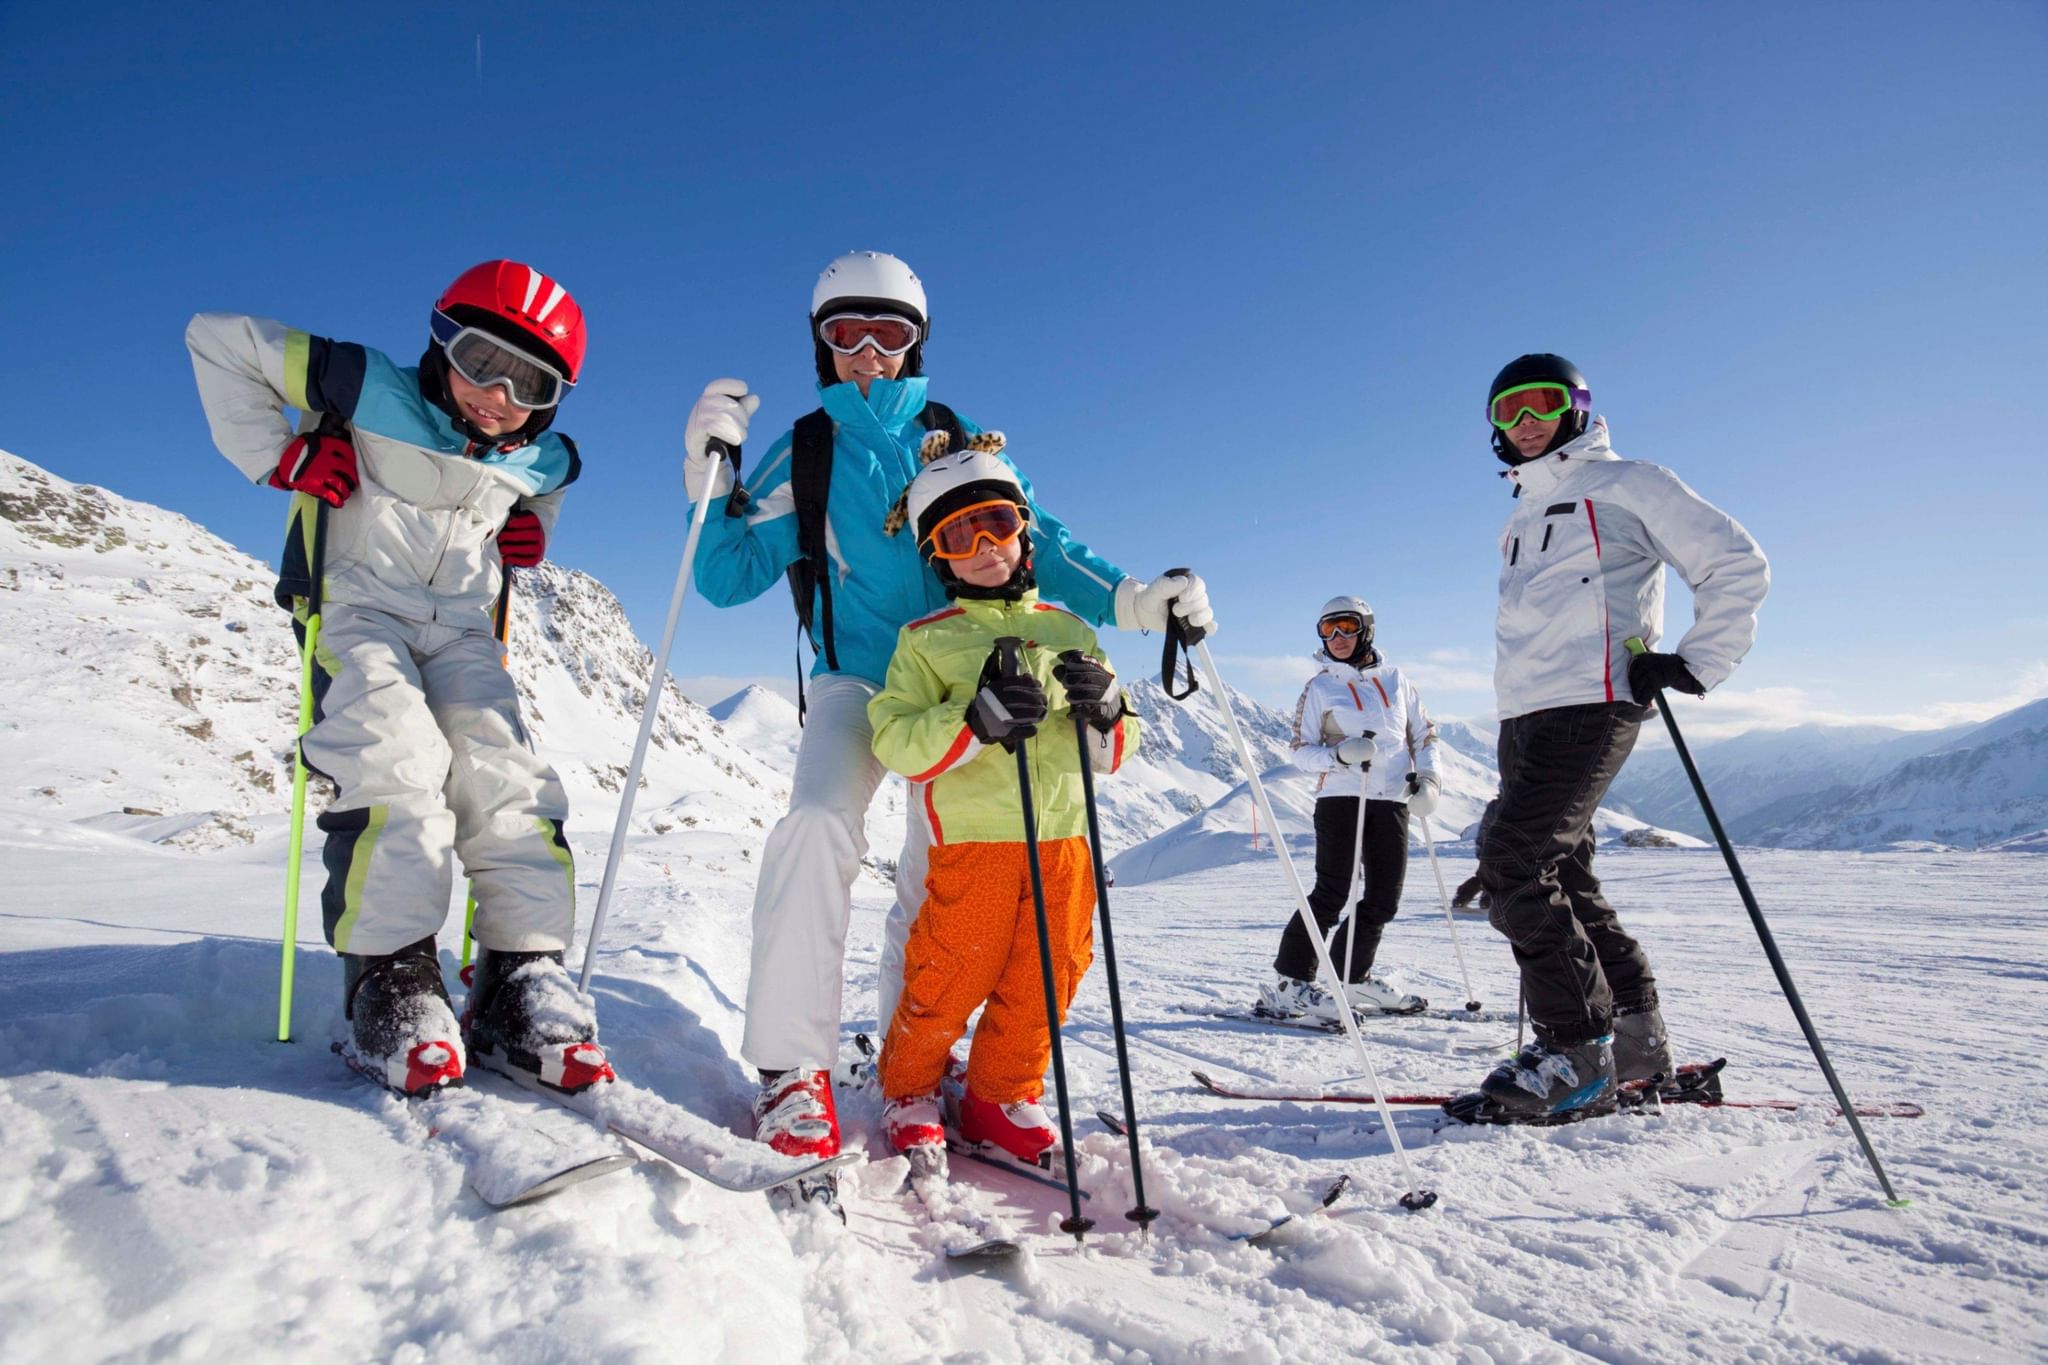 Ski lt. Зимний отдых. Кататься на лыжах. Семья на лыжах. Семья катается на лыжах.